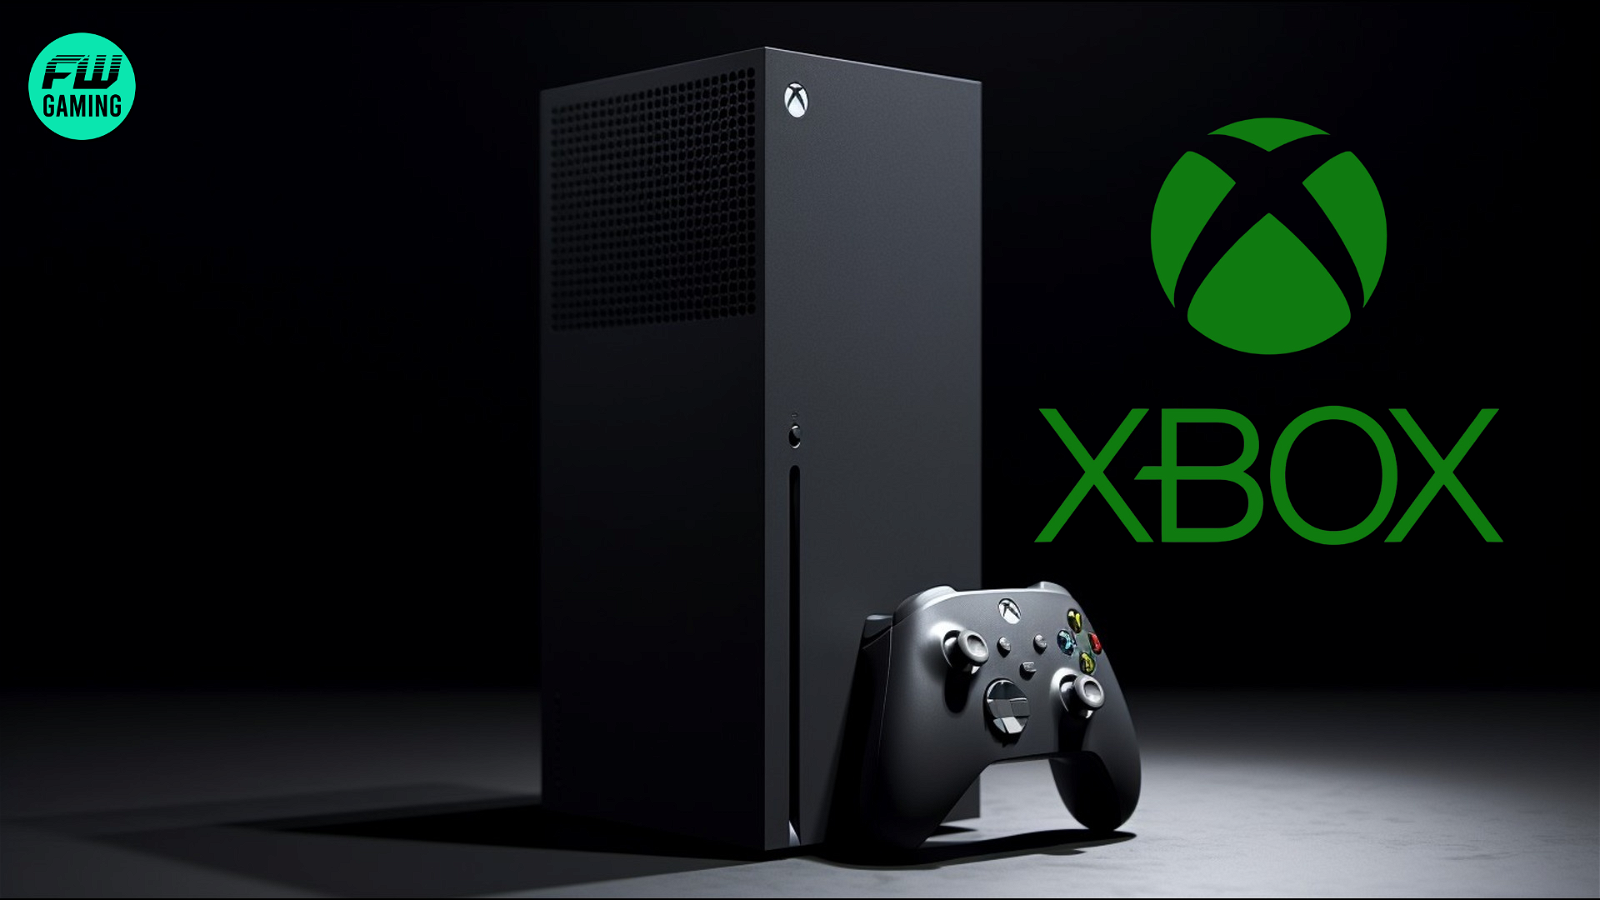 Leaked Microsoft Documents Show New Xbox